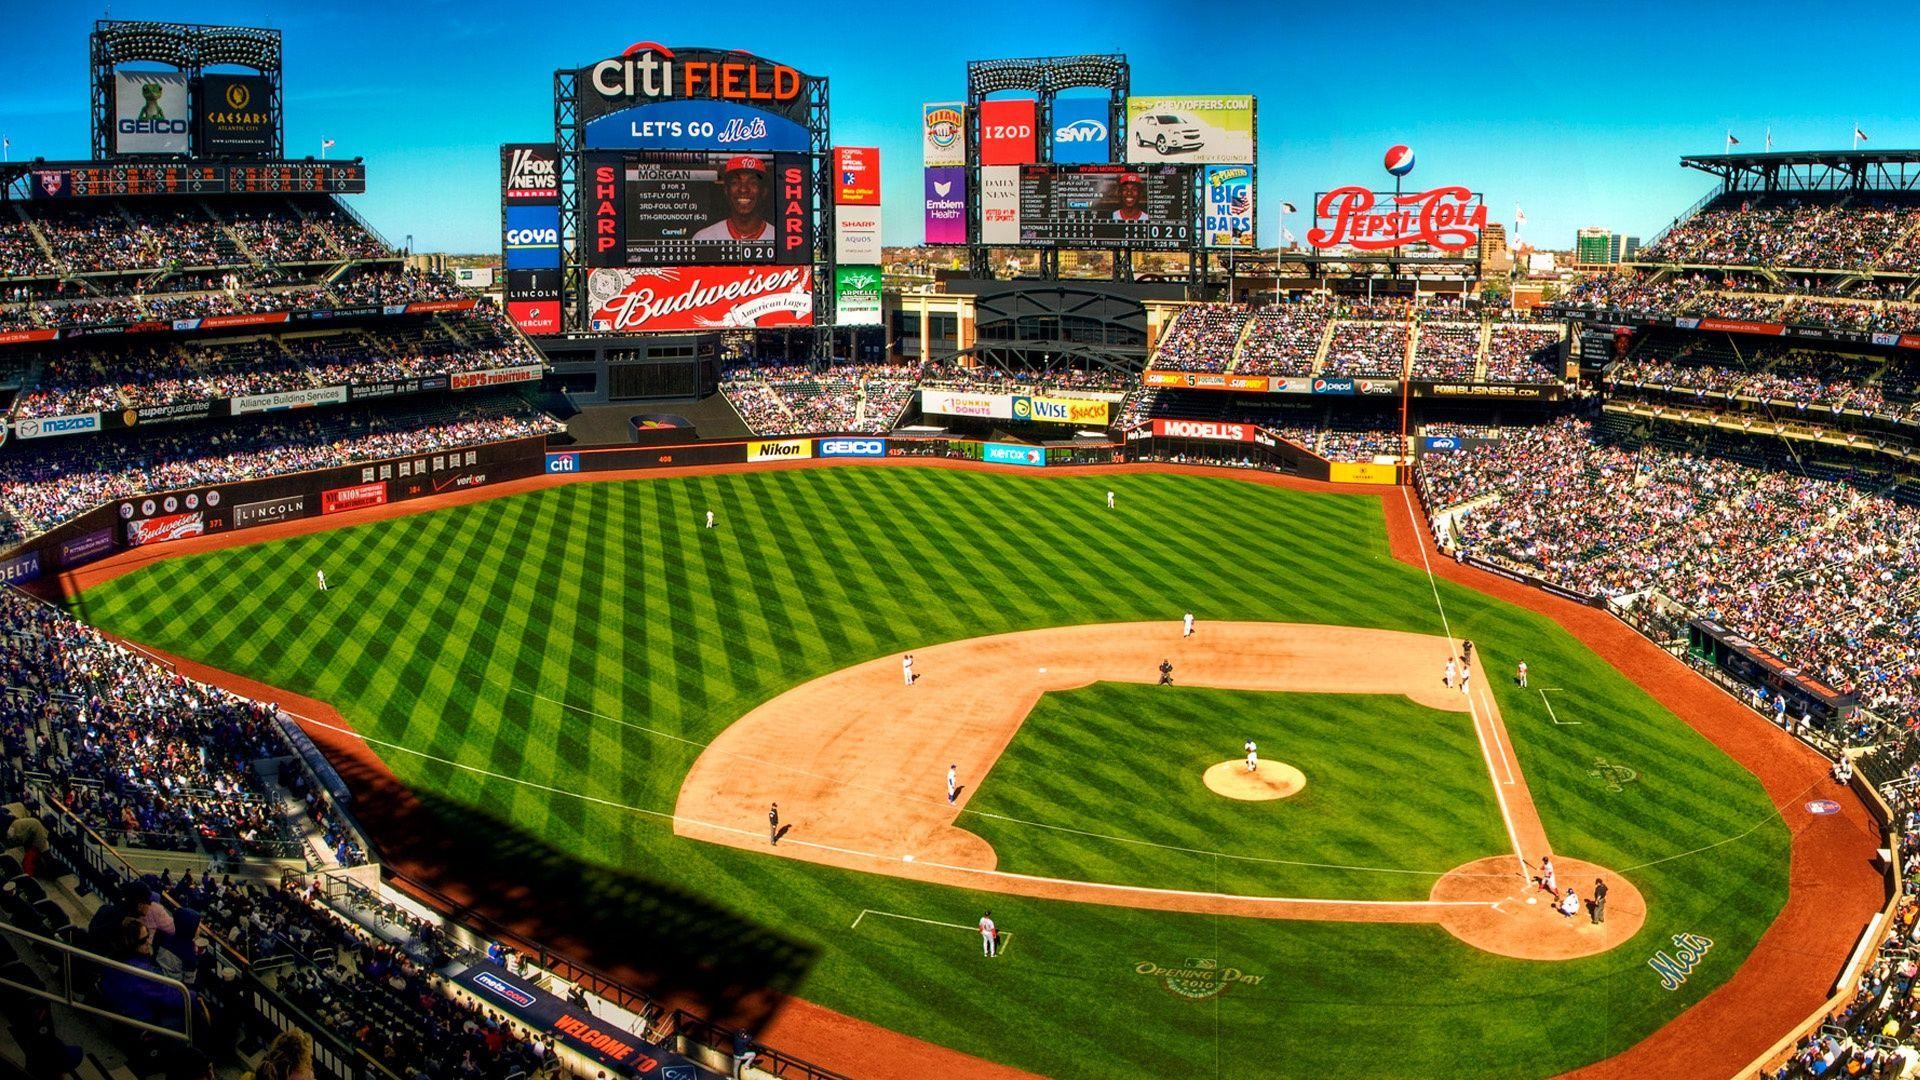 New York Mets wallpaper. New York Mets background. Baseball